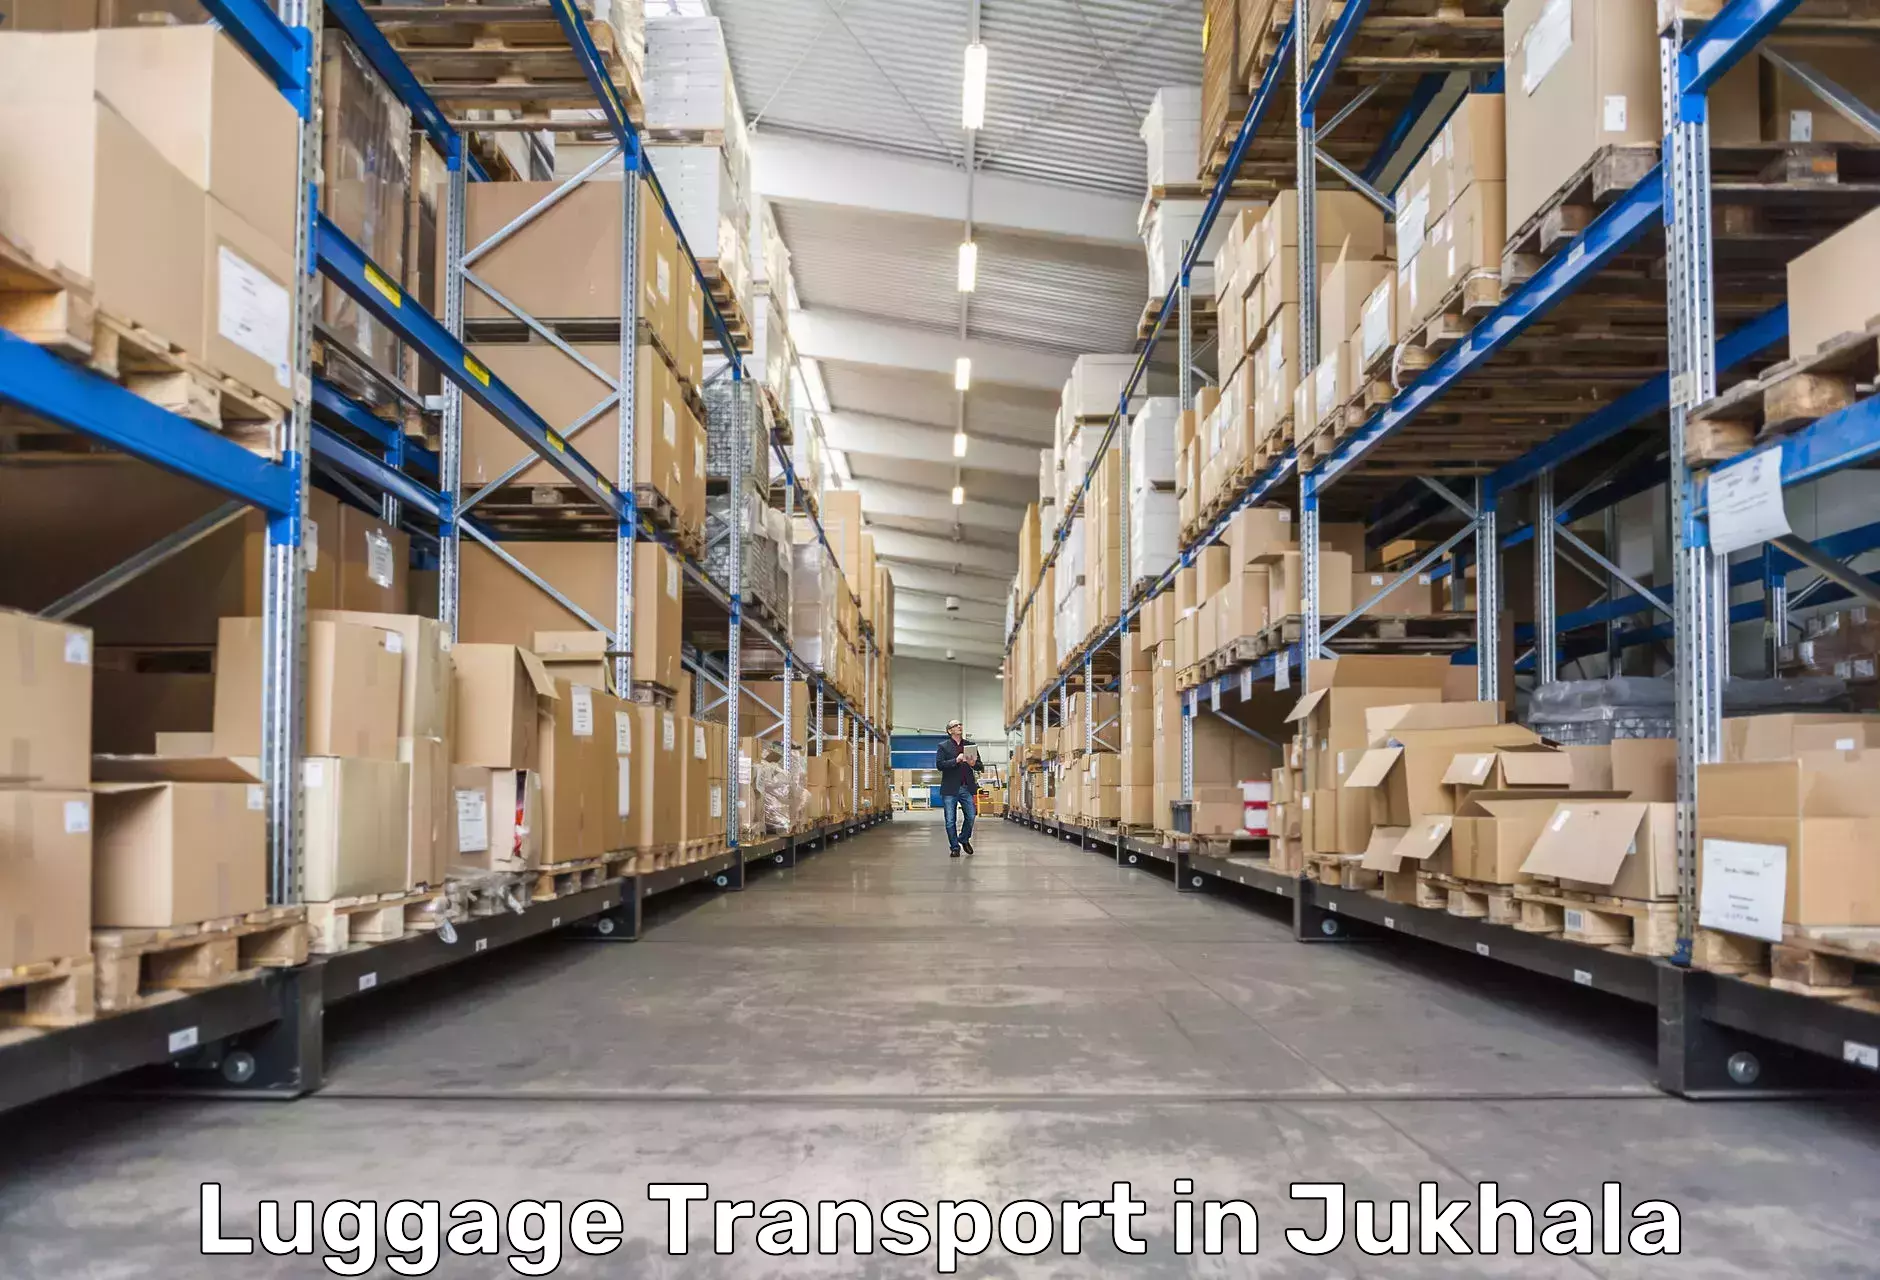 Domestic luggage transport in Jukhala